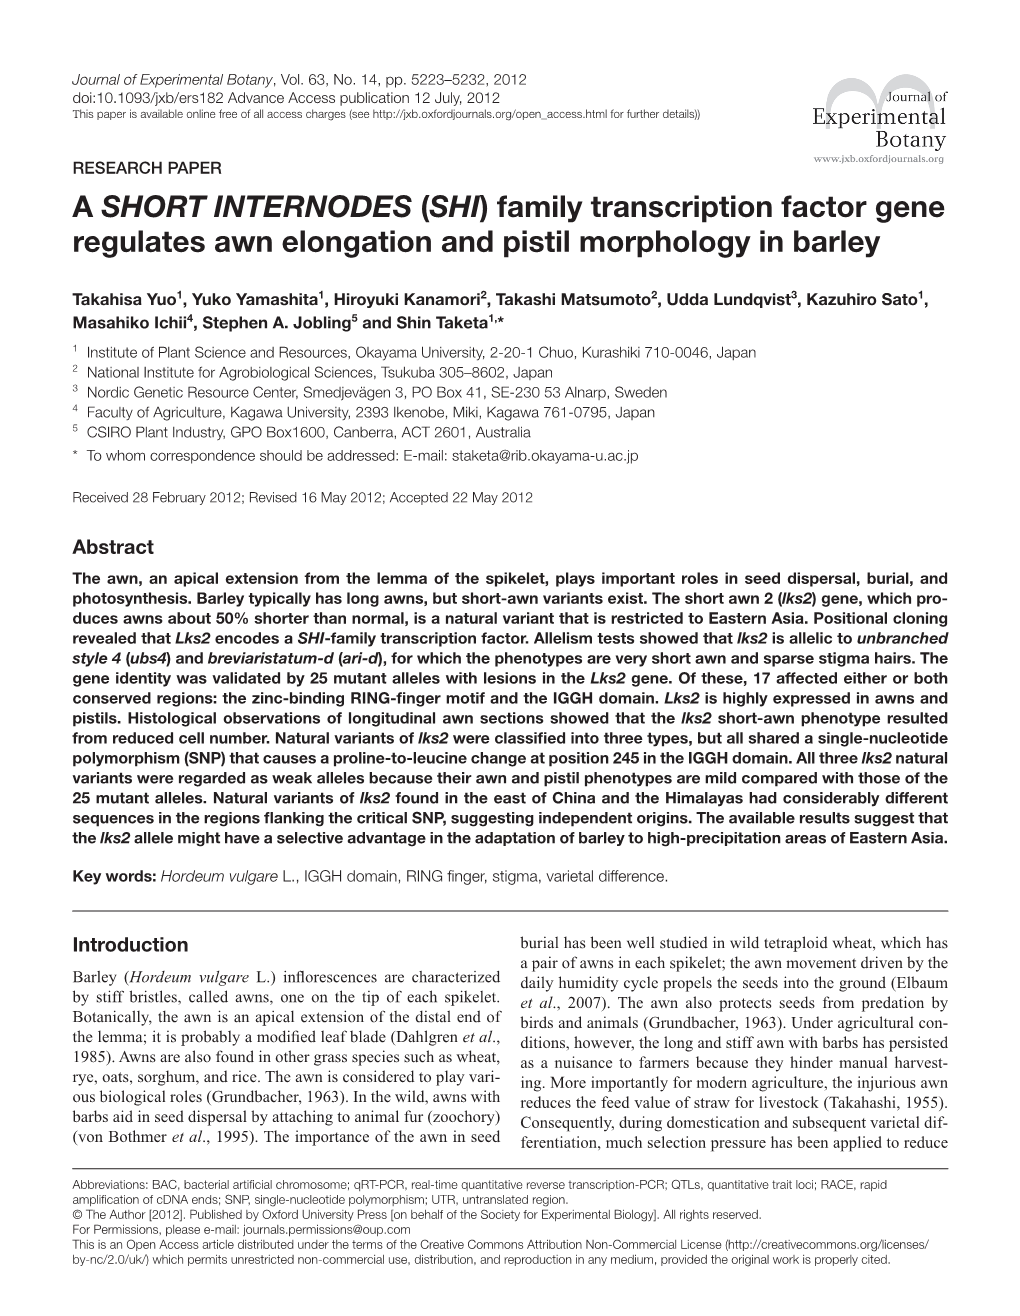 (SHI) Family Transcription Factor Gene Regulates Awn Elongation and Pistil